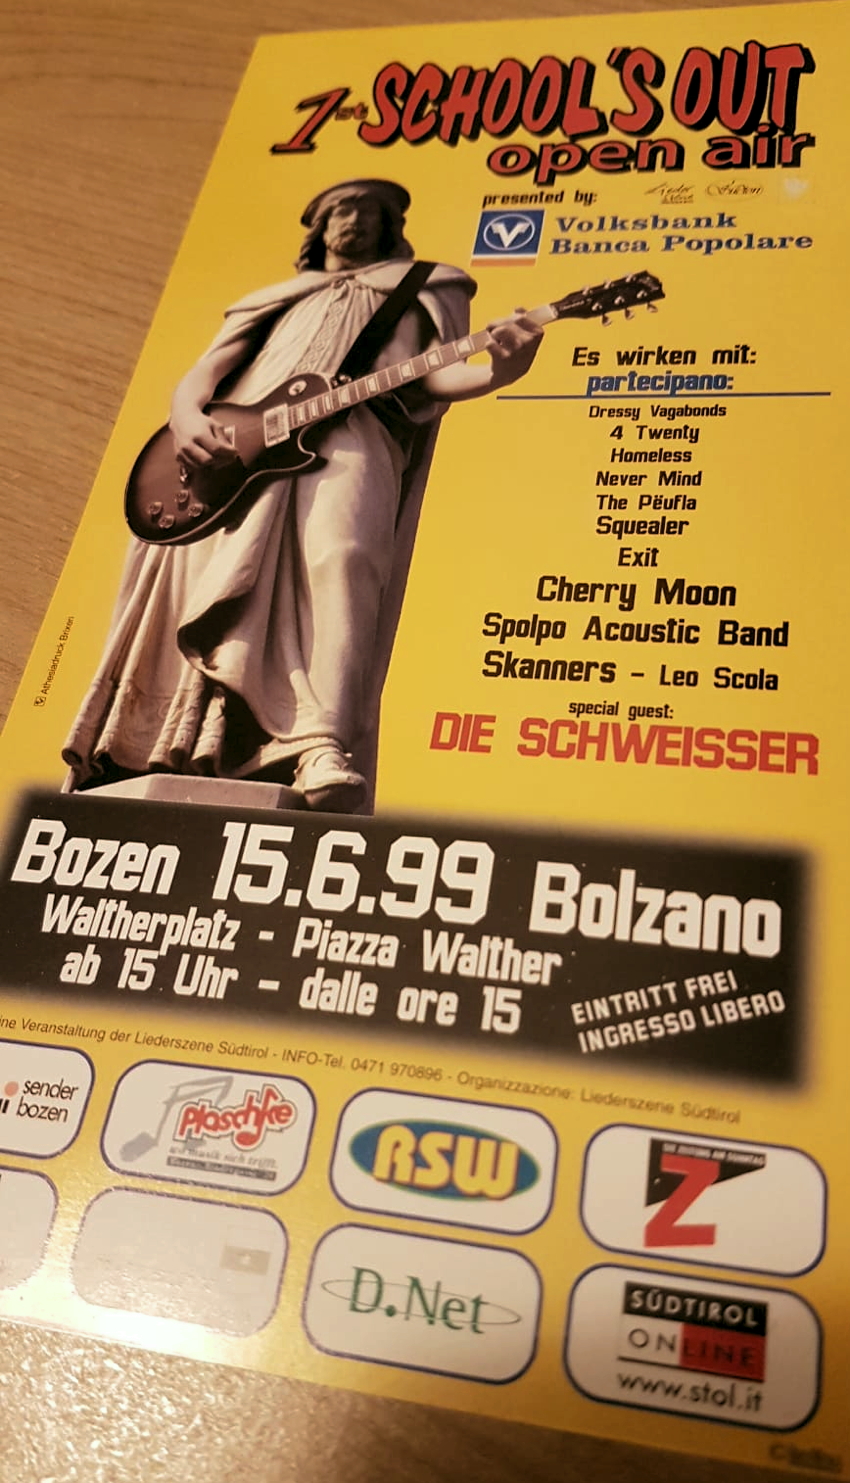 Plakat zum 1. School's Out Openair in Bozen 1999